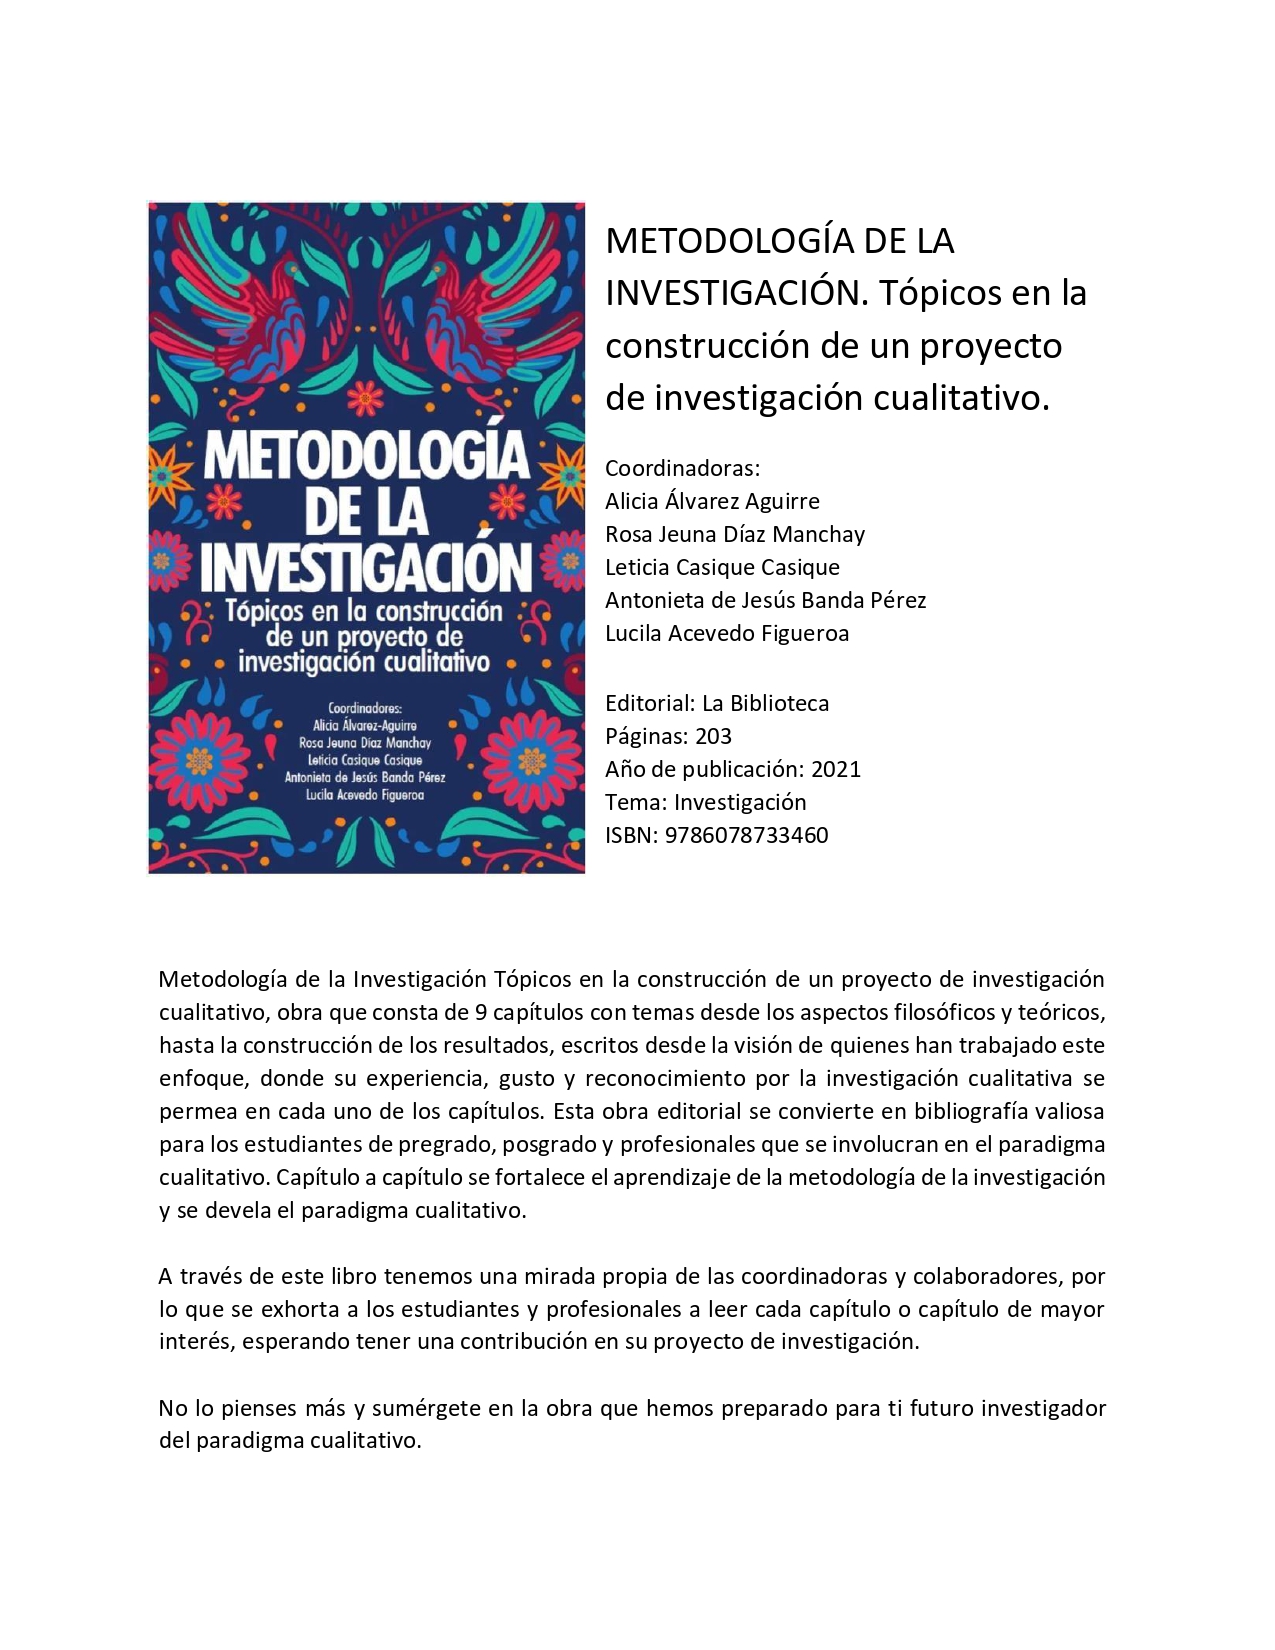 METODOLOGIA_DE_LA_INVESTIGACION._TOPICOS_page-0001.jpg